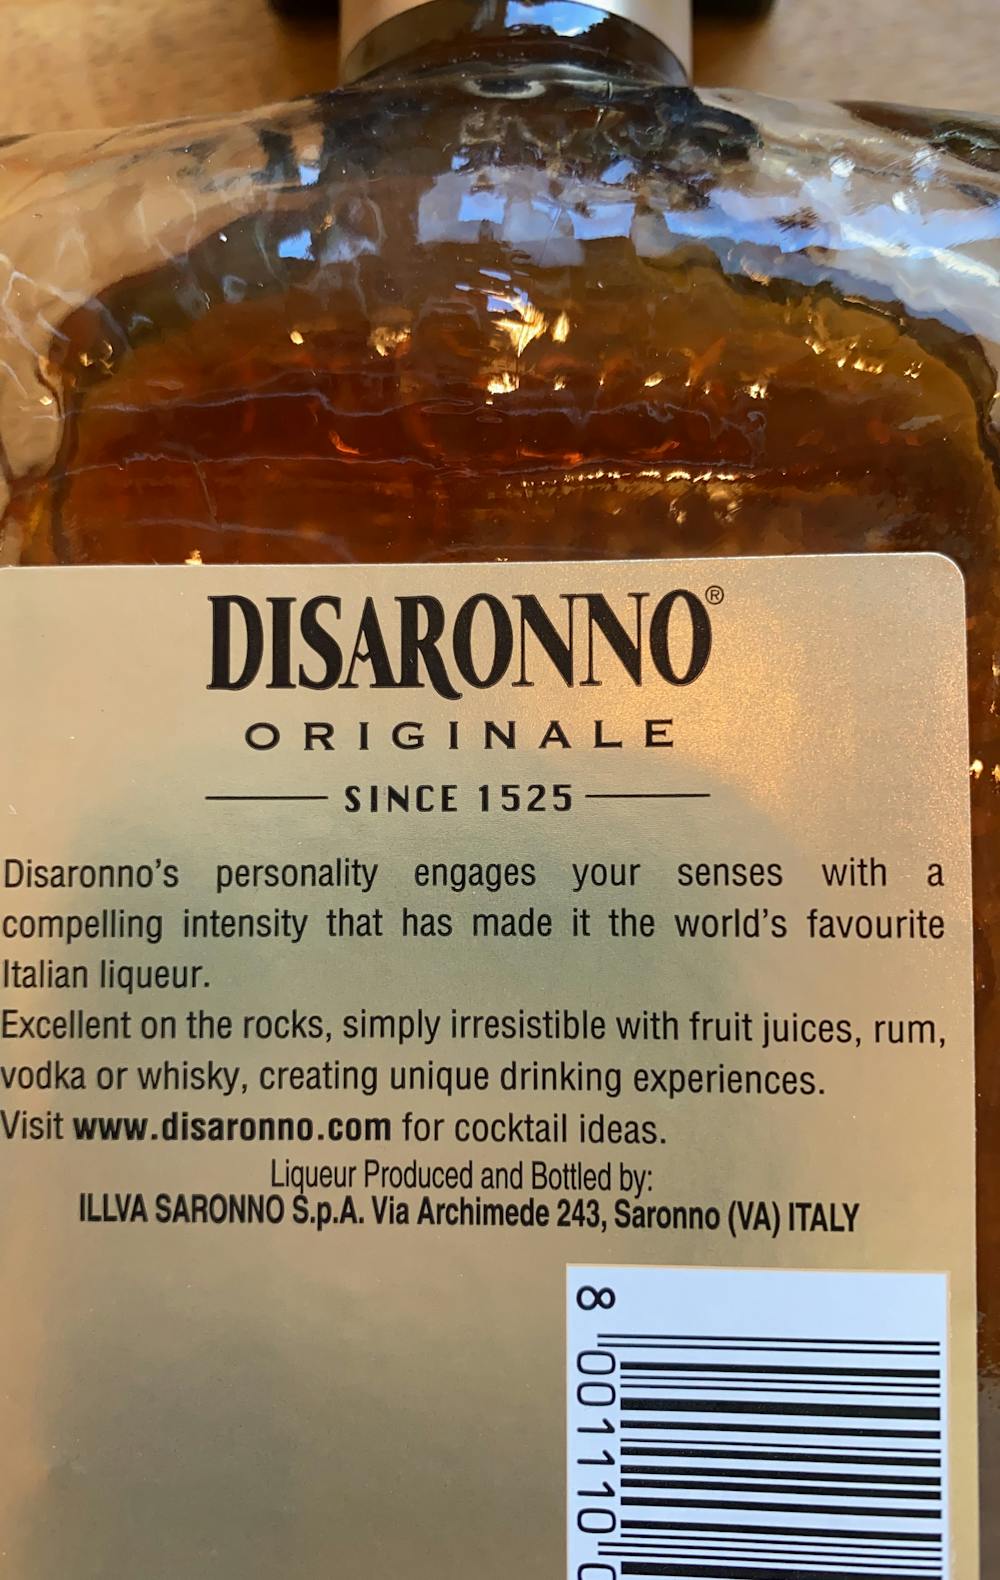 Ingredienslisten til Disaronno, Illva Saronno